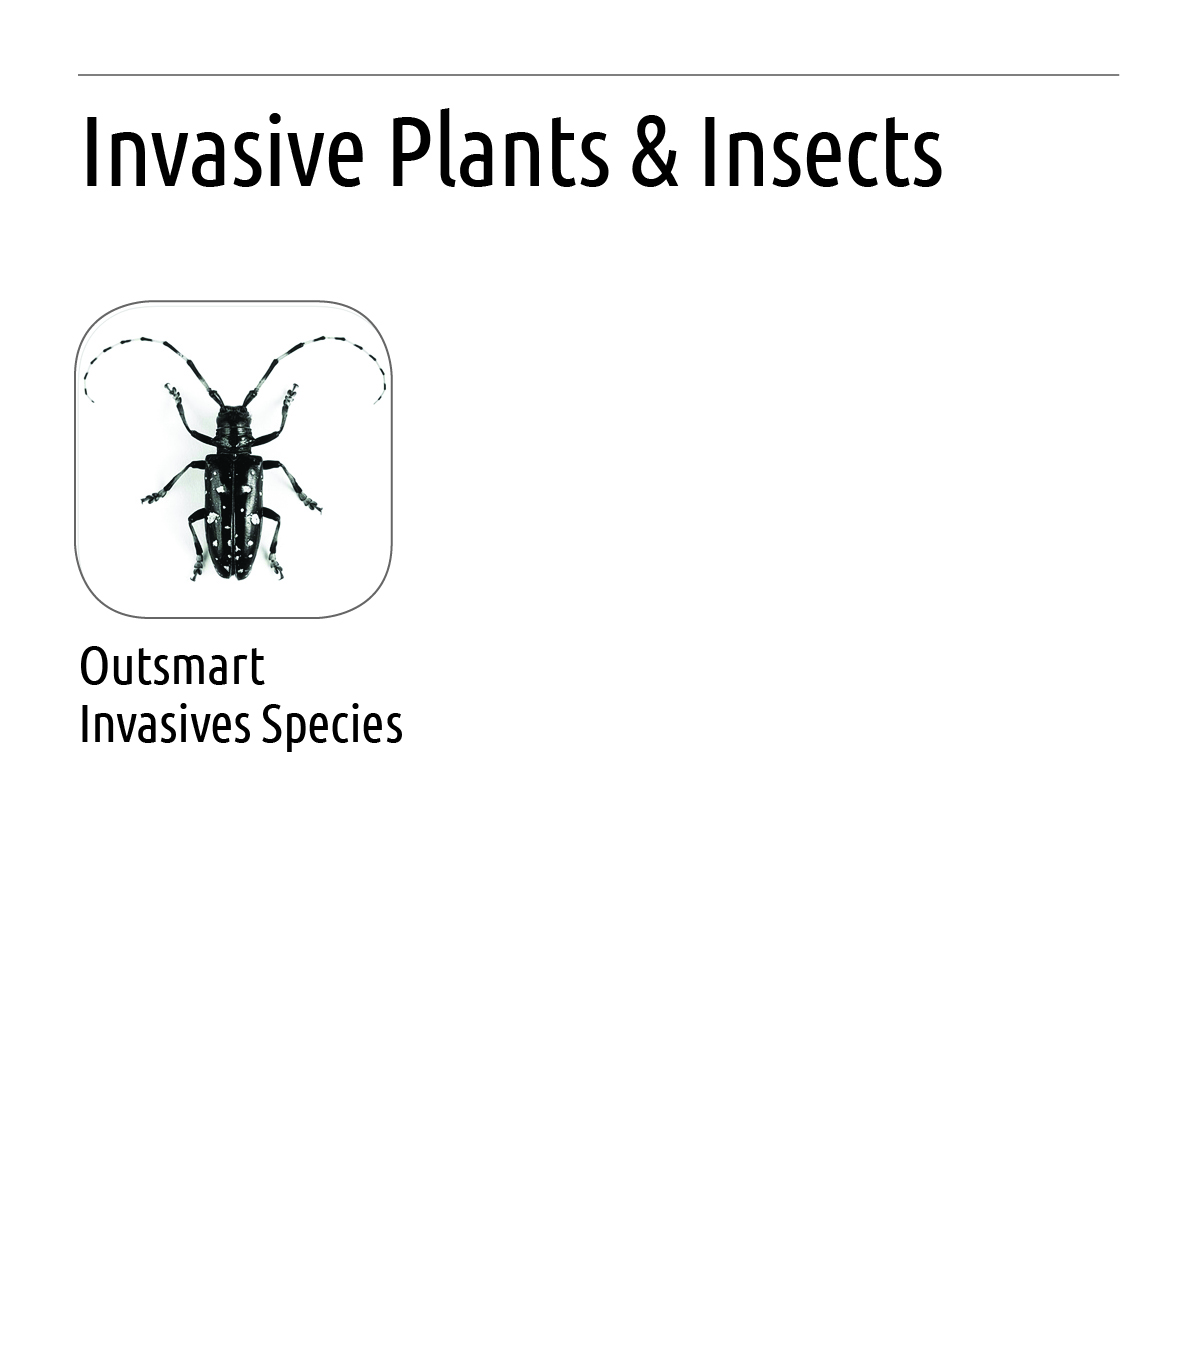 Greenbelt_InvasivePlants_InsectsApps.jpg